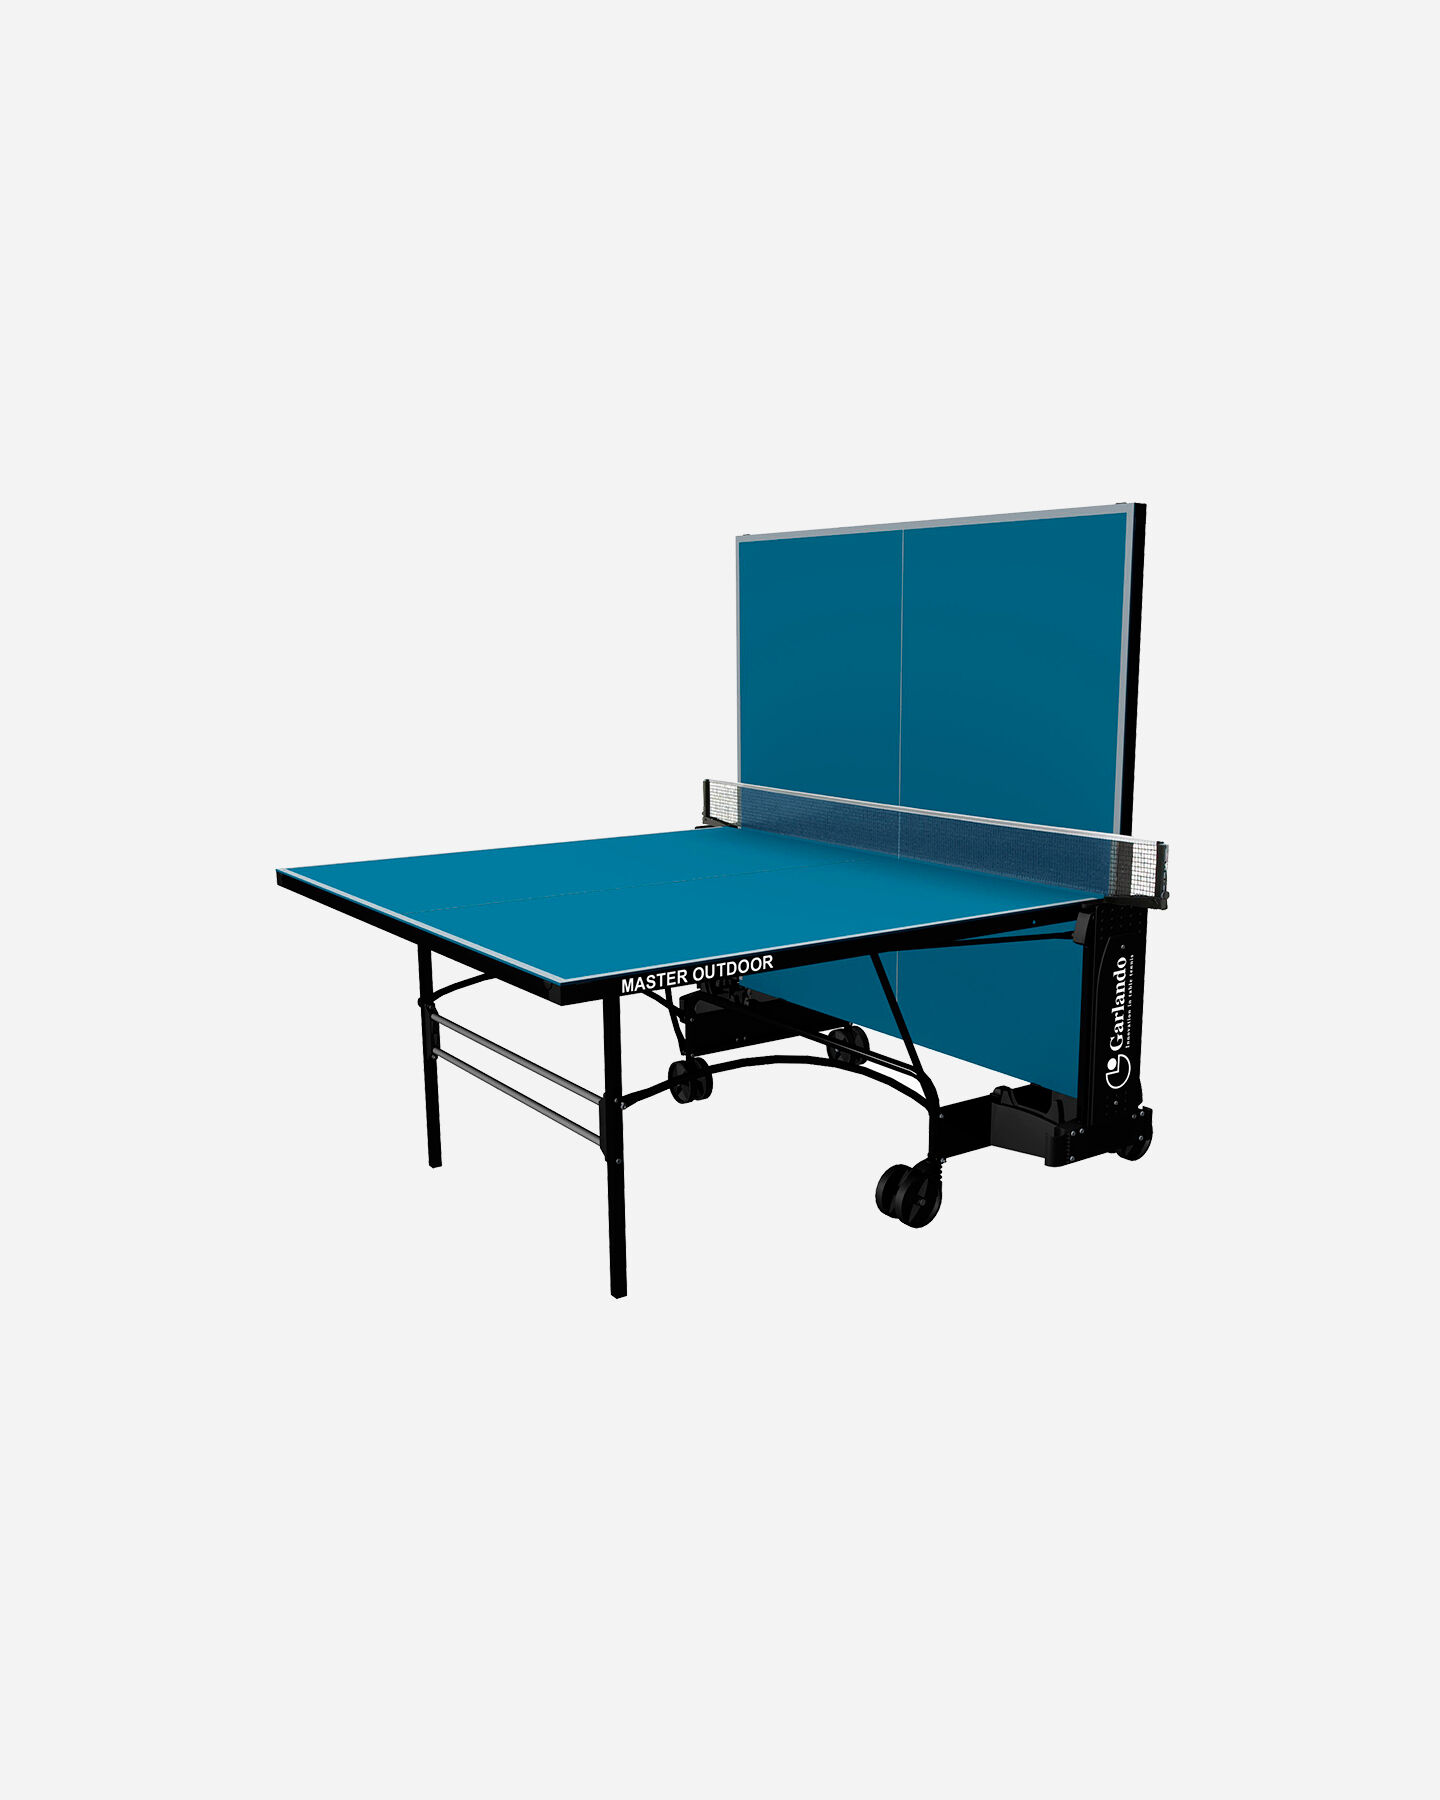  Tavolo ping pong GARLANDO MASTER OUTDOOR S1225845|N.D.|UNI scatto 1